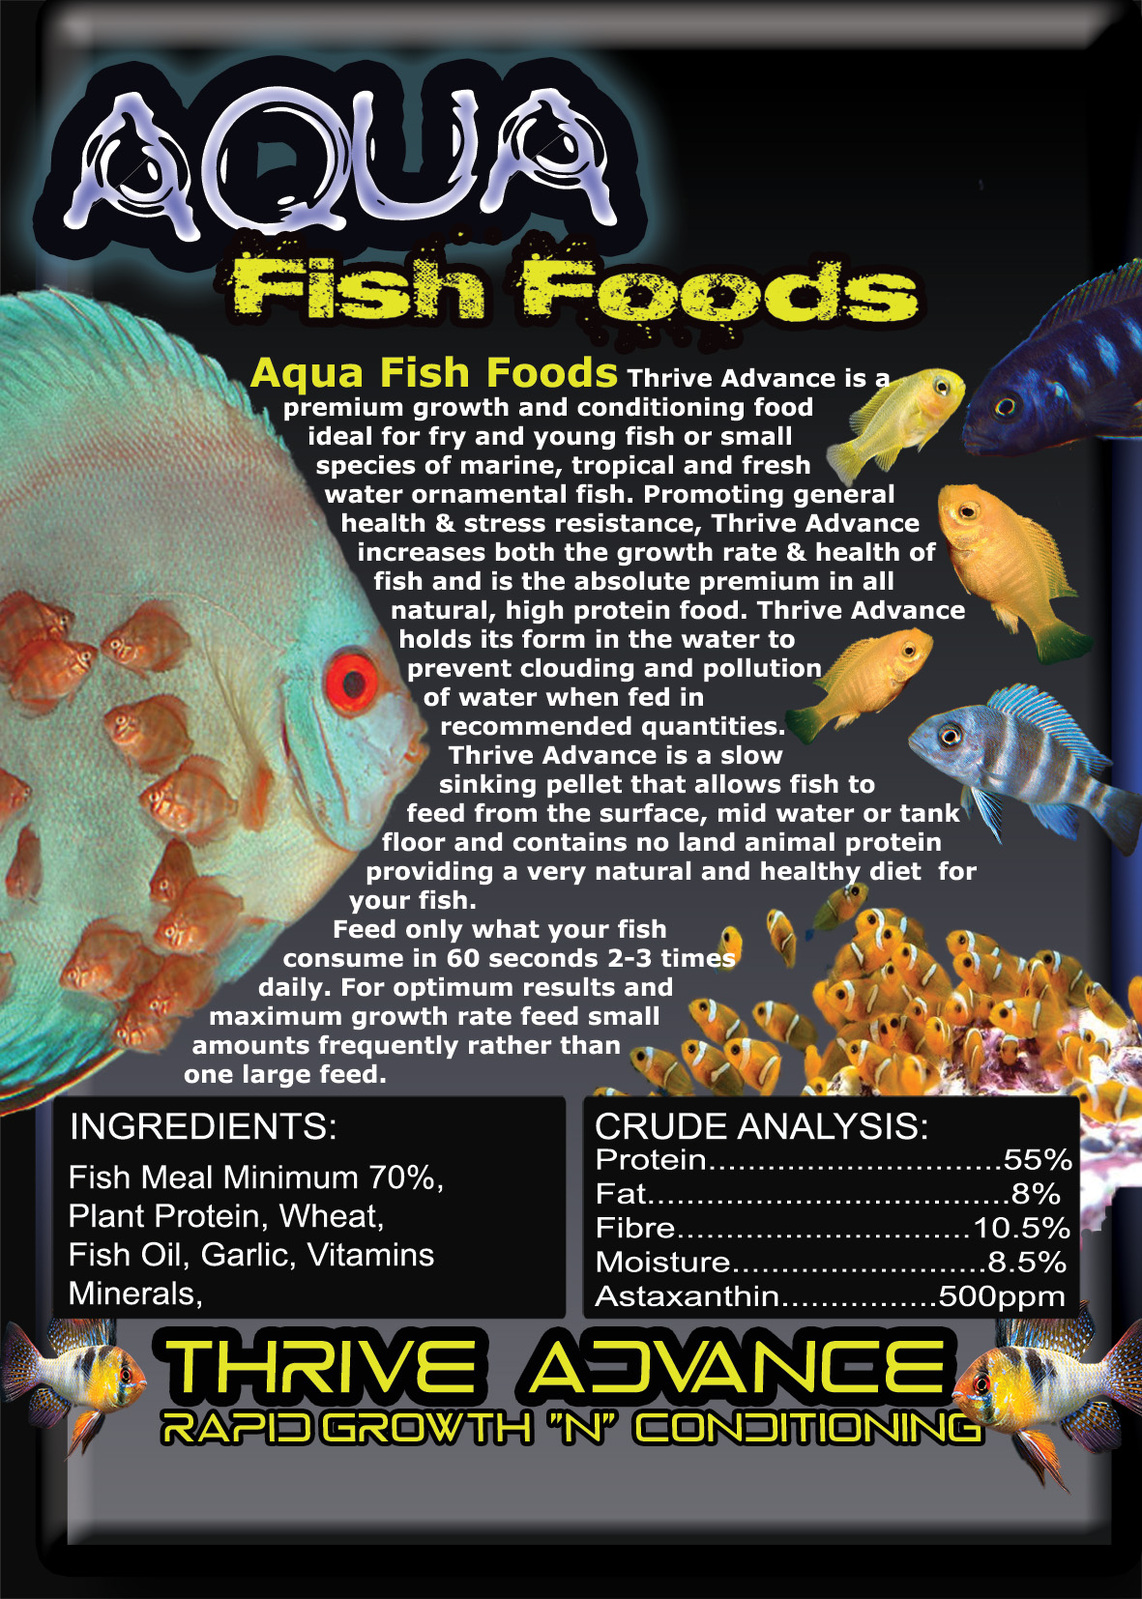 Aqua Fish Foods Thrive Tropical Marine Micro Fry Fishfood Pellet  15kg Bucket